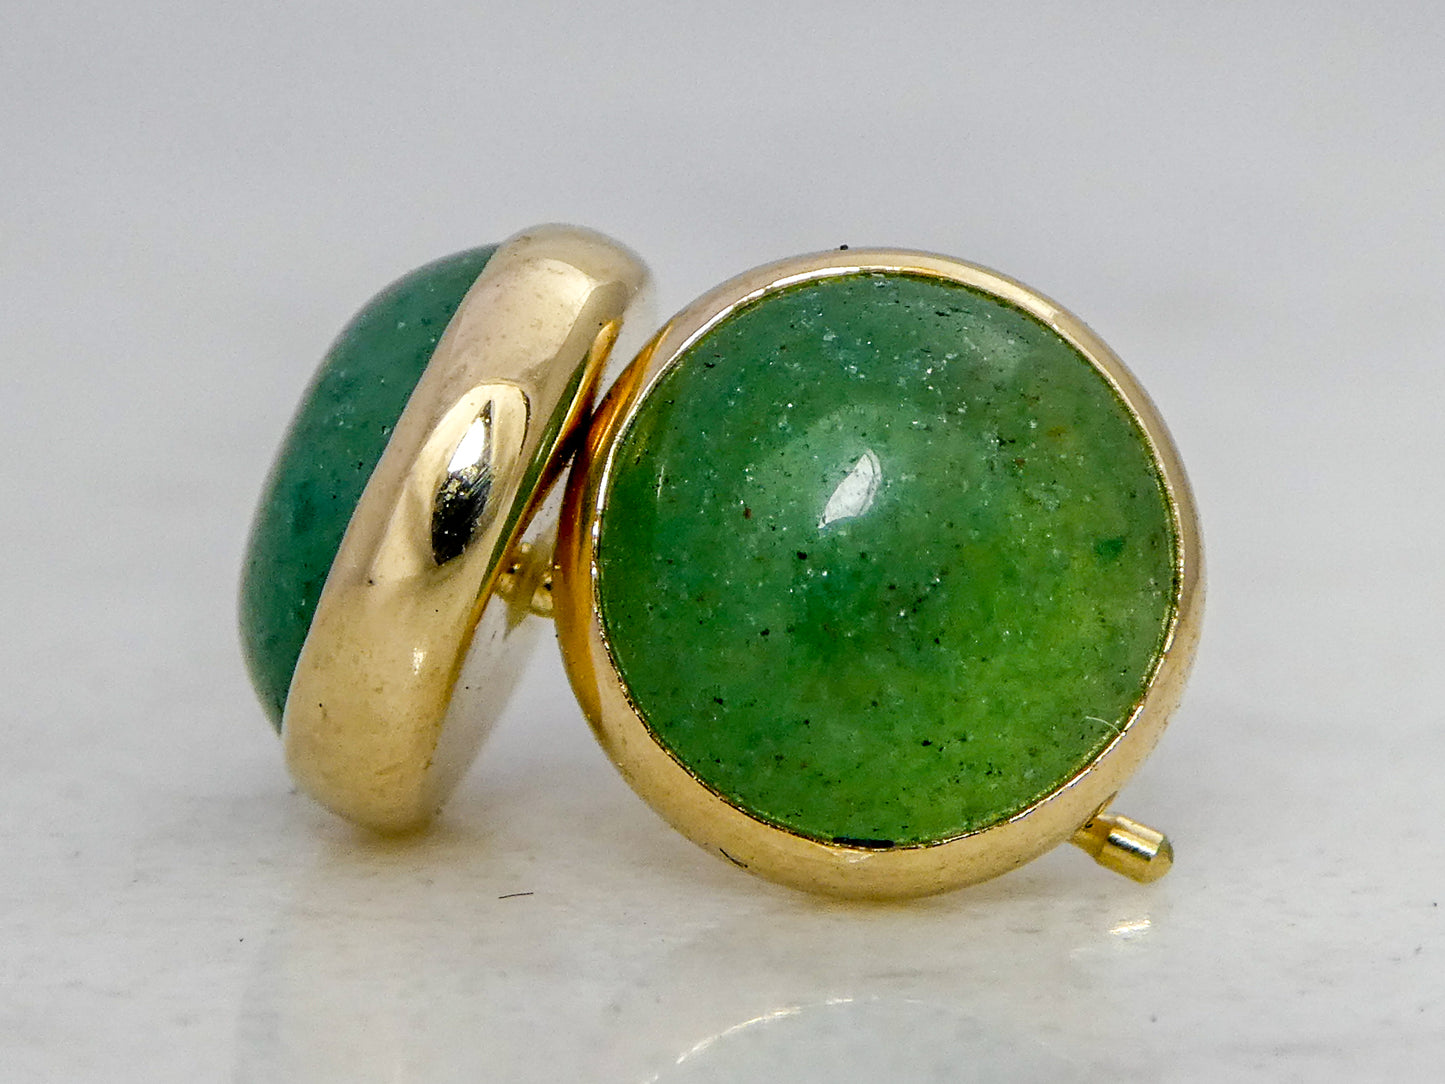 Green Aventurine in 14k Gold Bezel Studs - 8mm round cabochon earrings